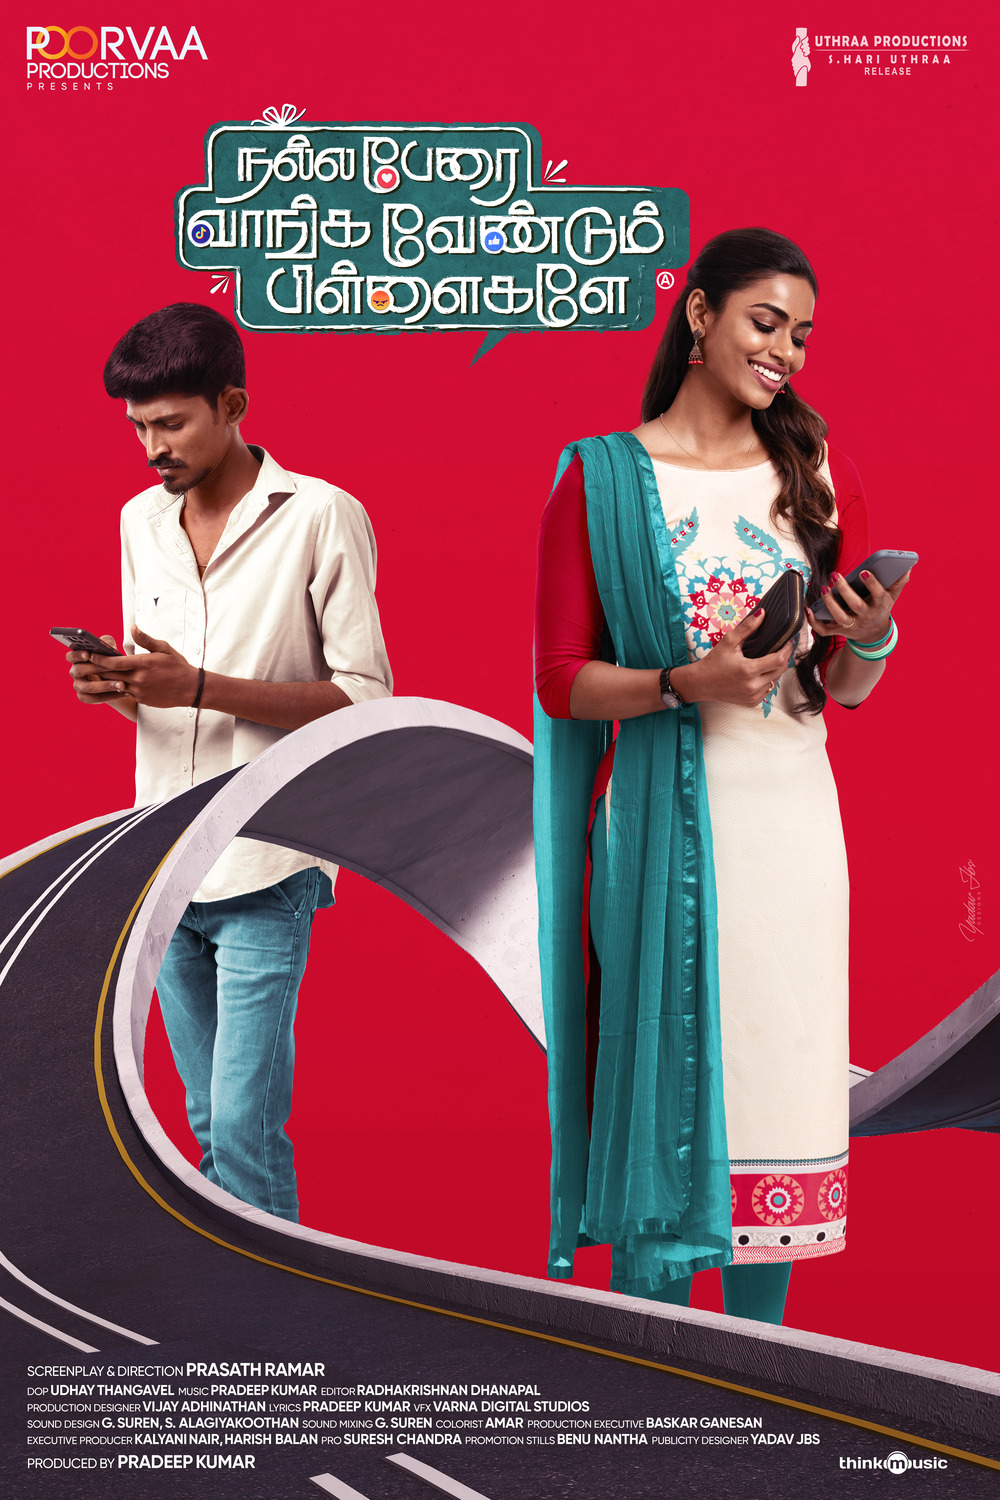 Extra Large Movie Poster Image for Nalla Perai Vaanga Vendum Pillaigale (#7 of 9)